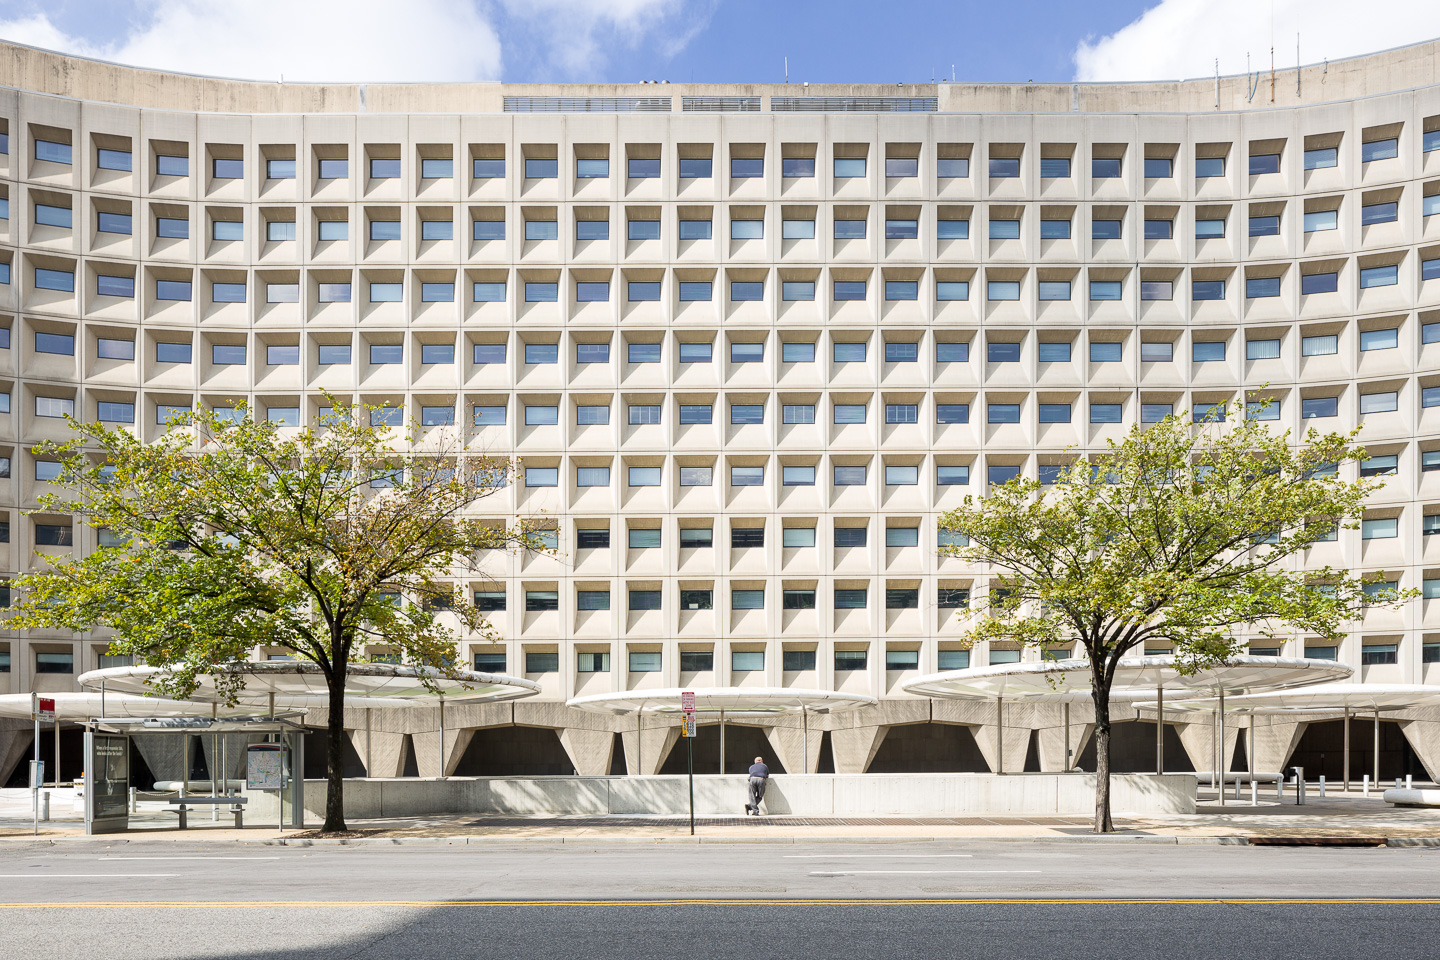 Robert C. Weaver Building in Washington DC by architect Marcel Breuer. Photograph by Jason R. Woods.